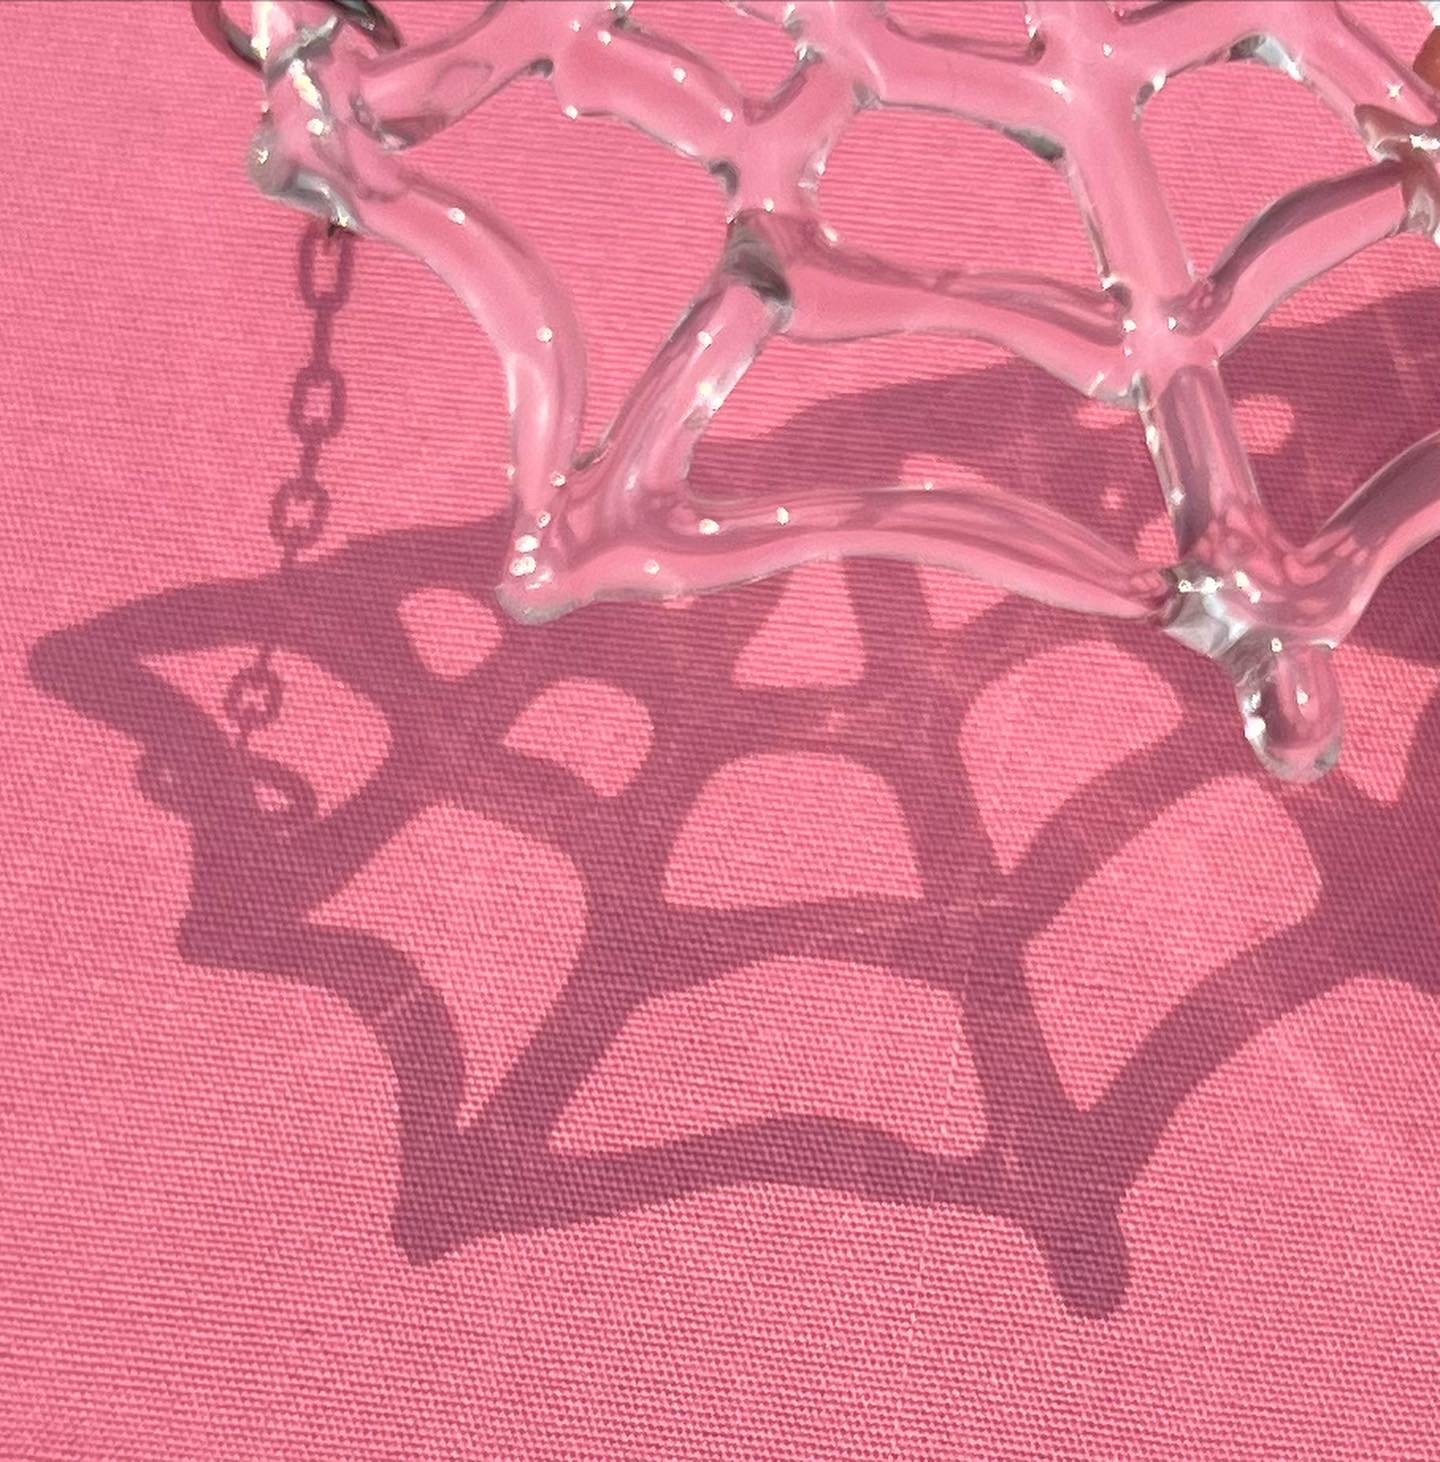 Image of Spiderweb necklace 